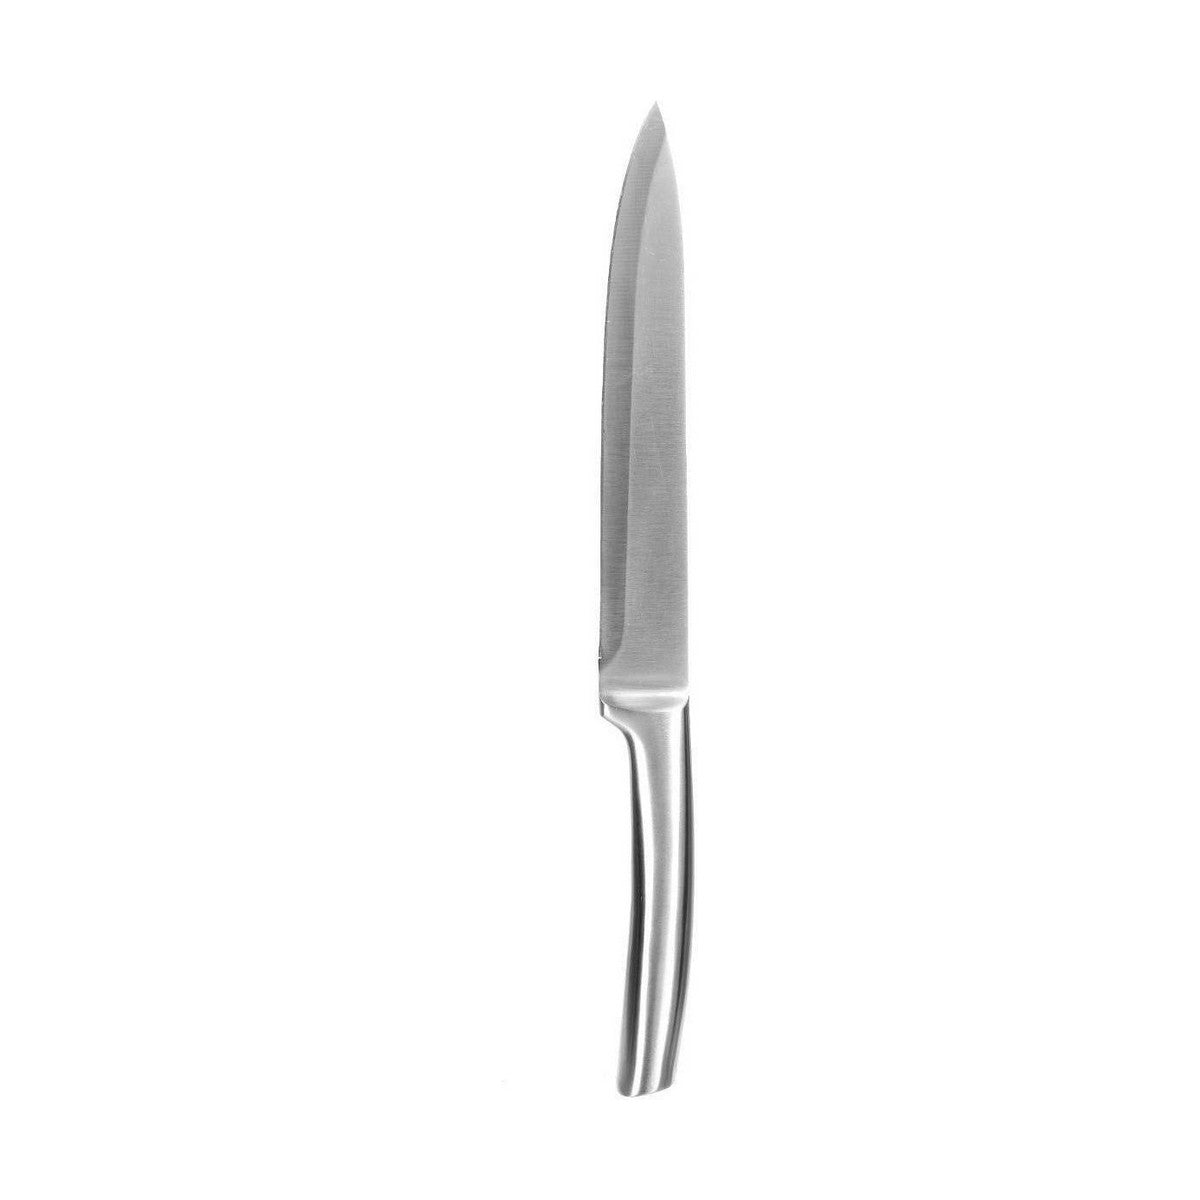 Knife set with acacia block